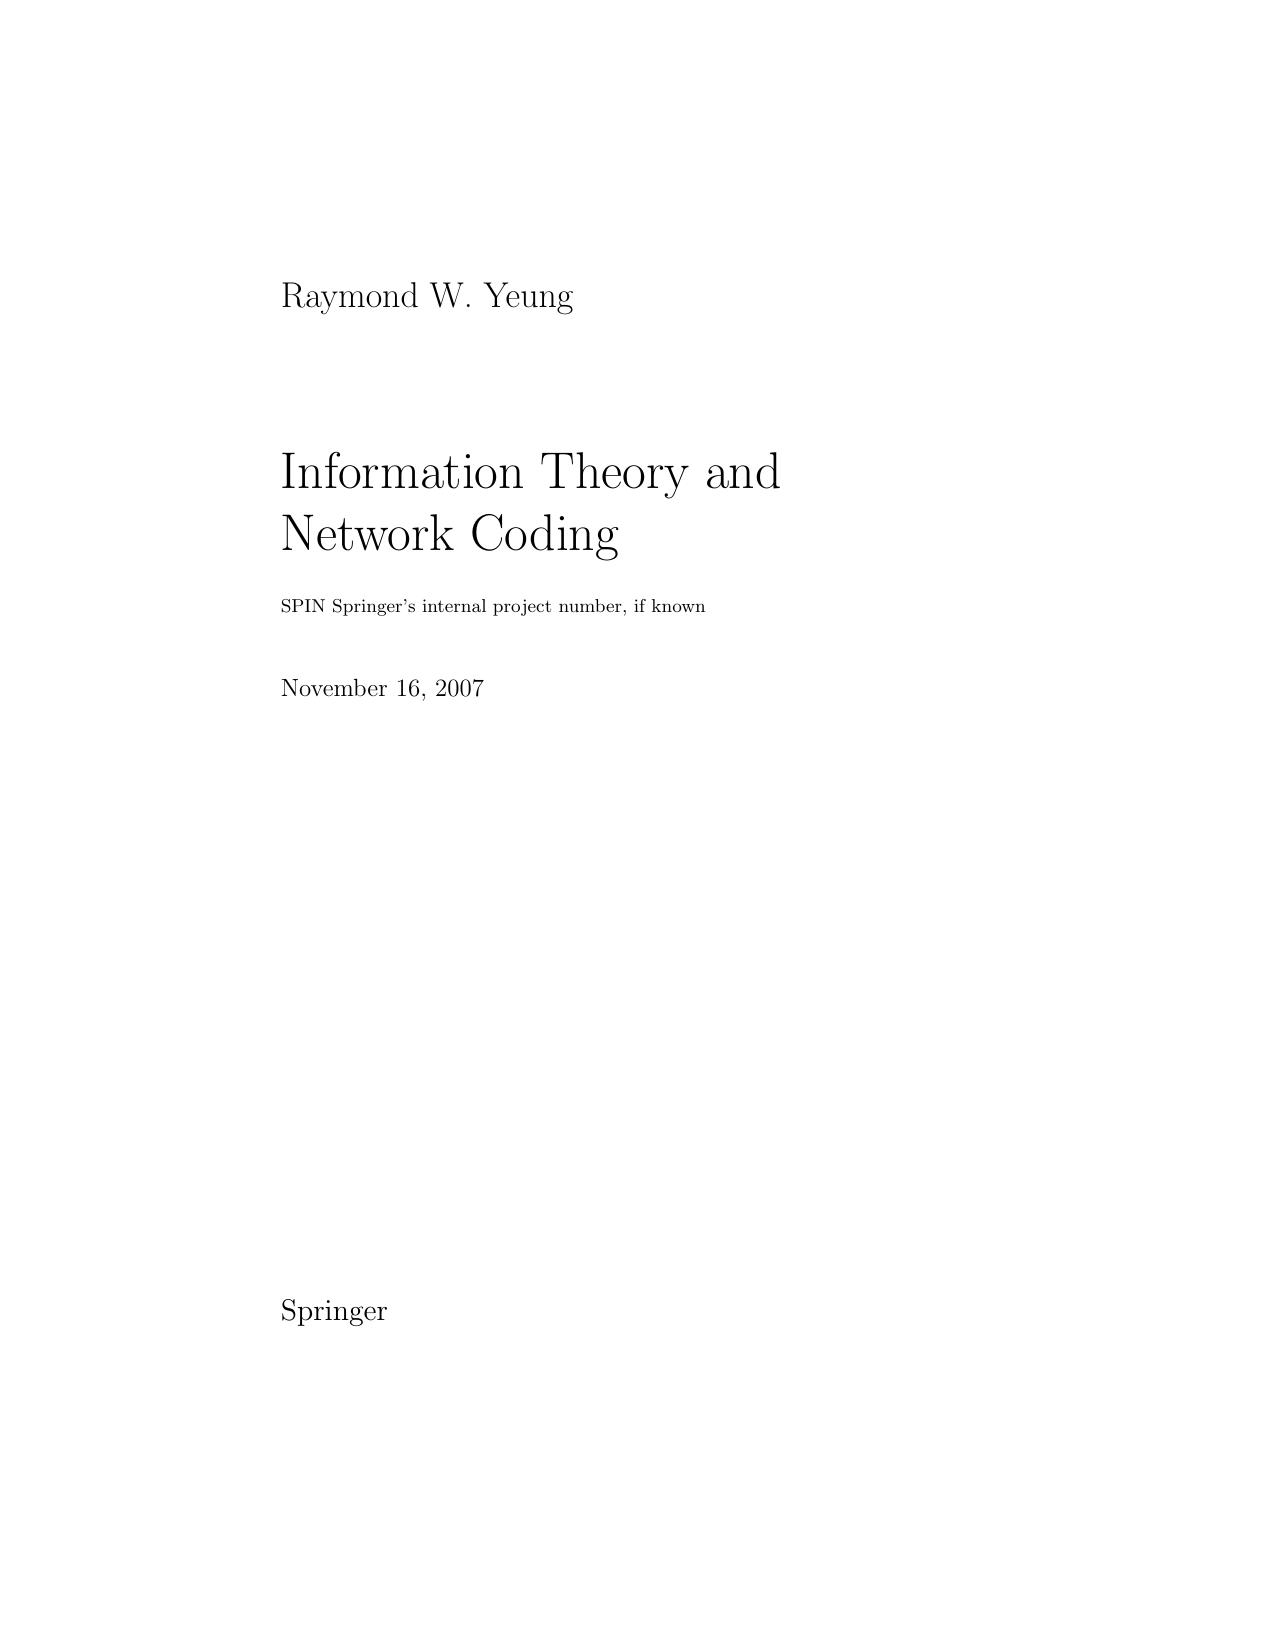 Information Theory 2007.pdf